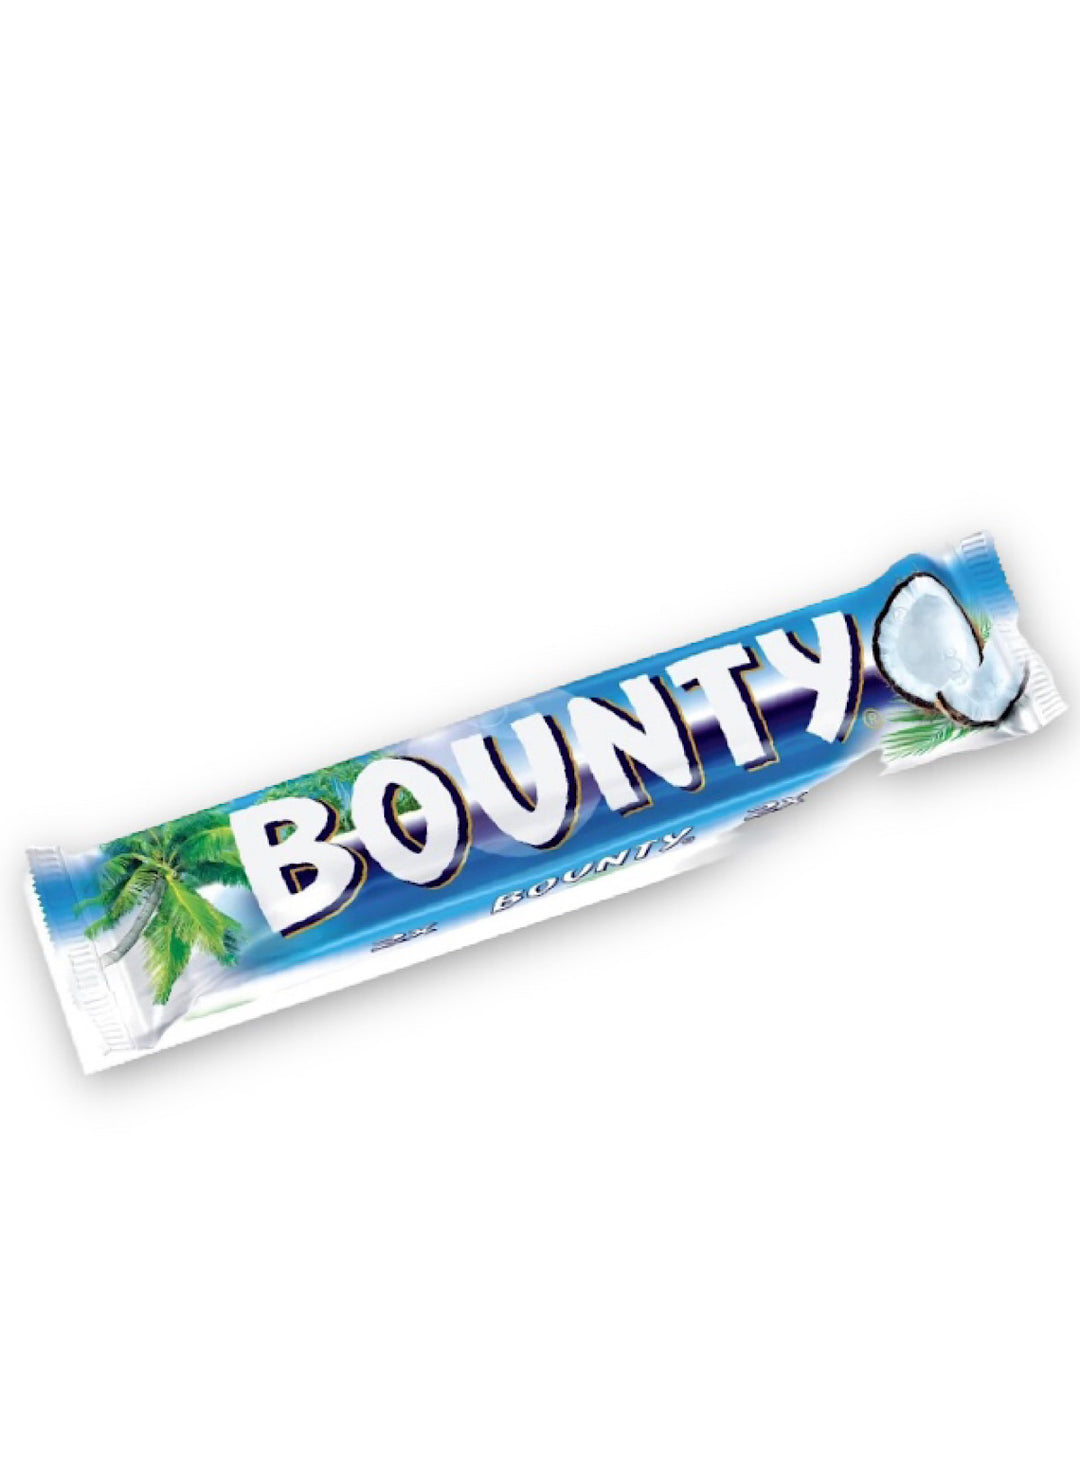 Coconut Chocolate bar - Bounty - 1.9 oz